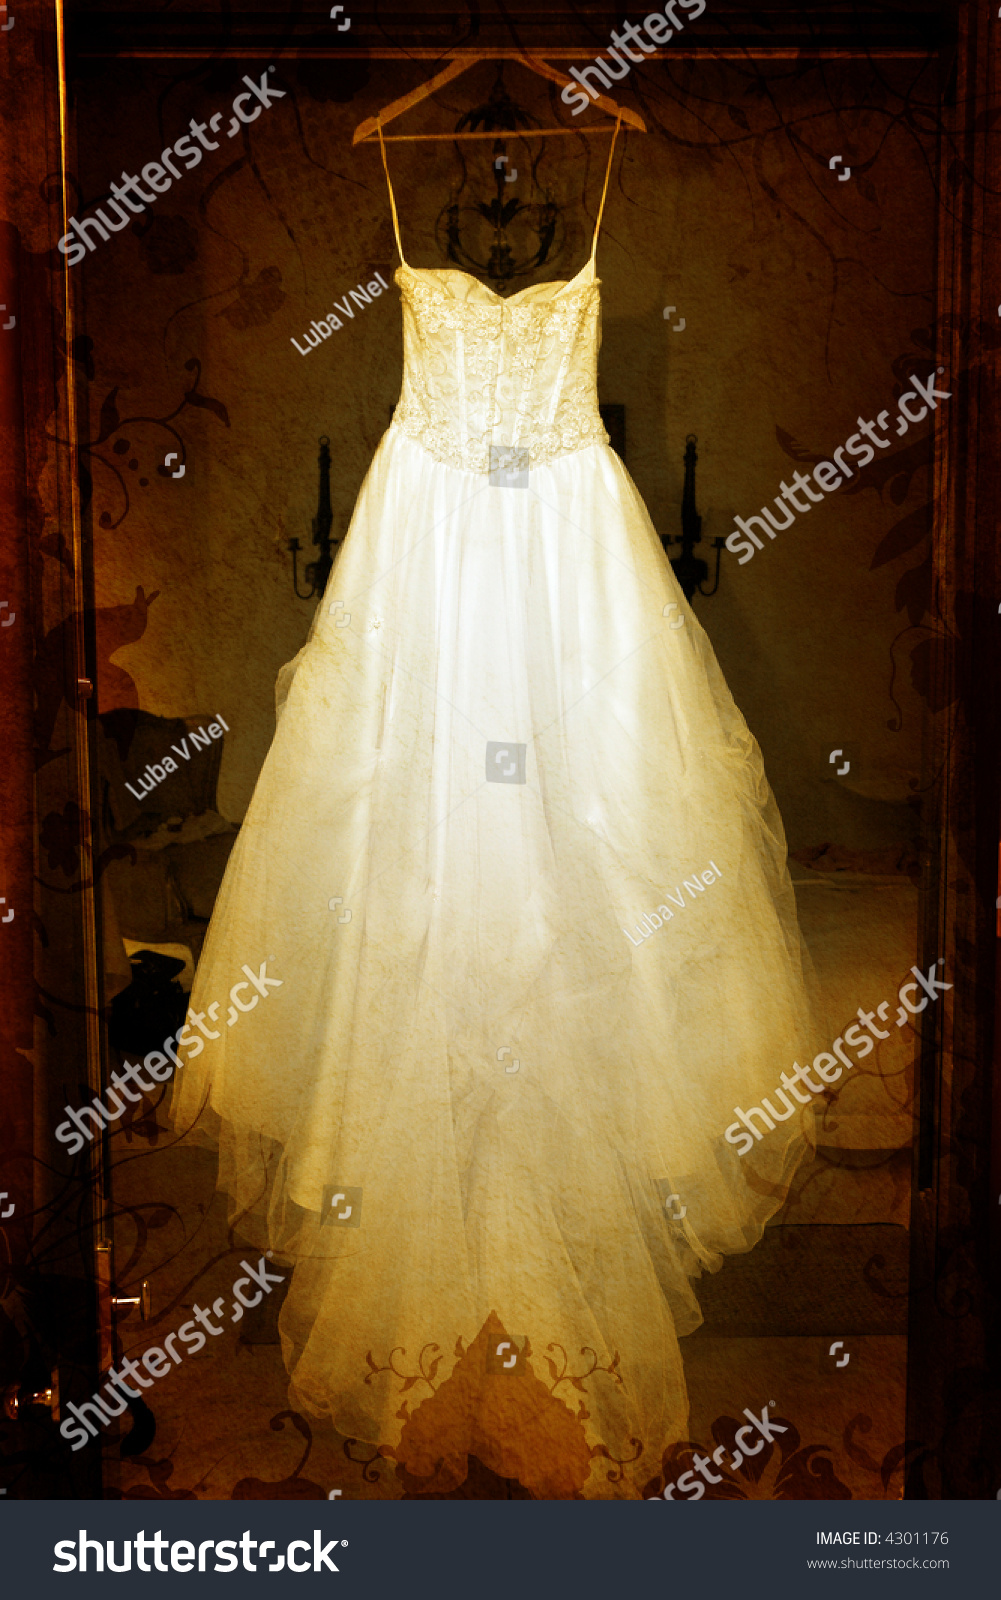 Grunge Wedding Dress With Tulle Skirt Hanging In A Doorway On Swirls ...